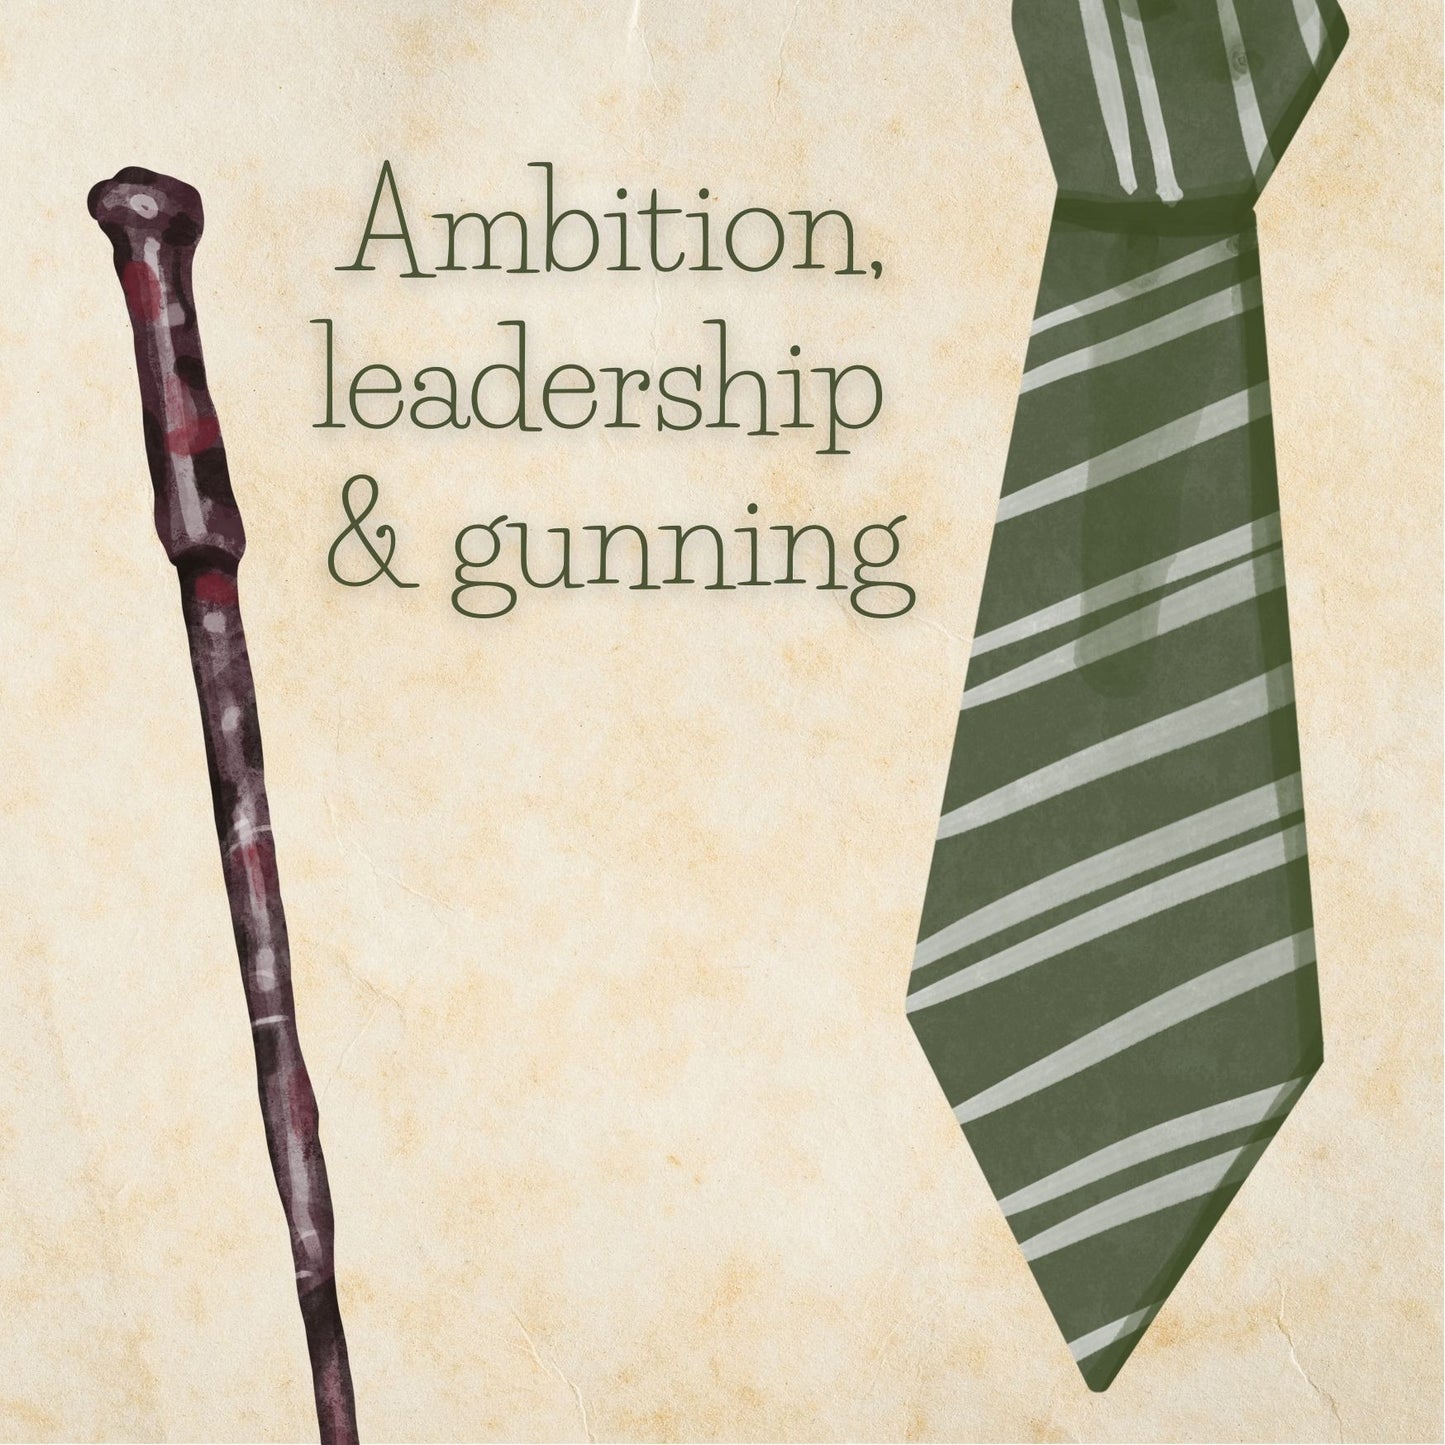 Ambition, leadership & gunning| Kaart Fripperies